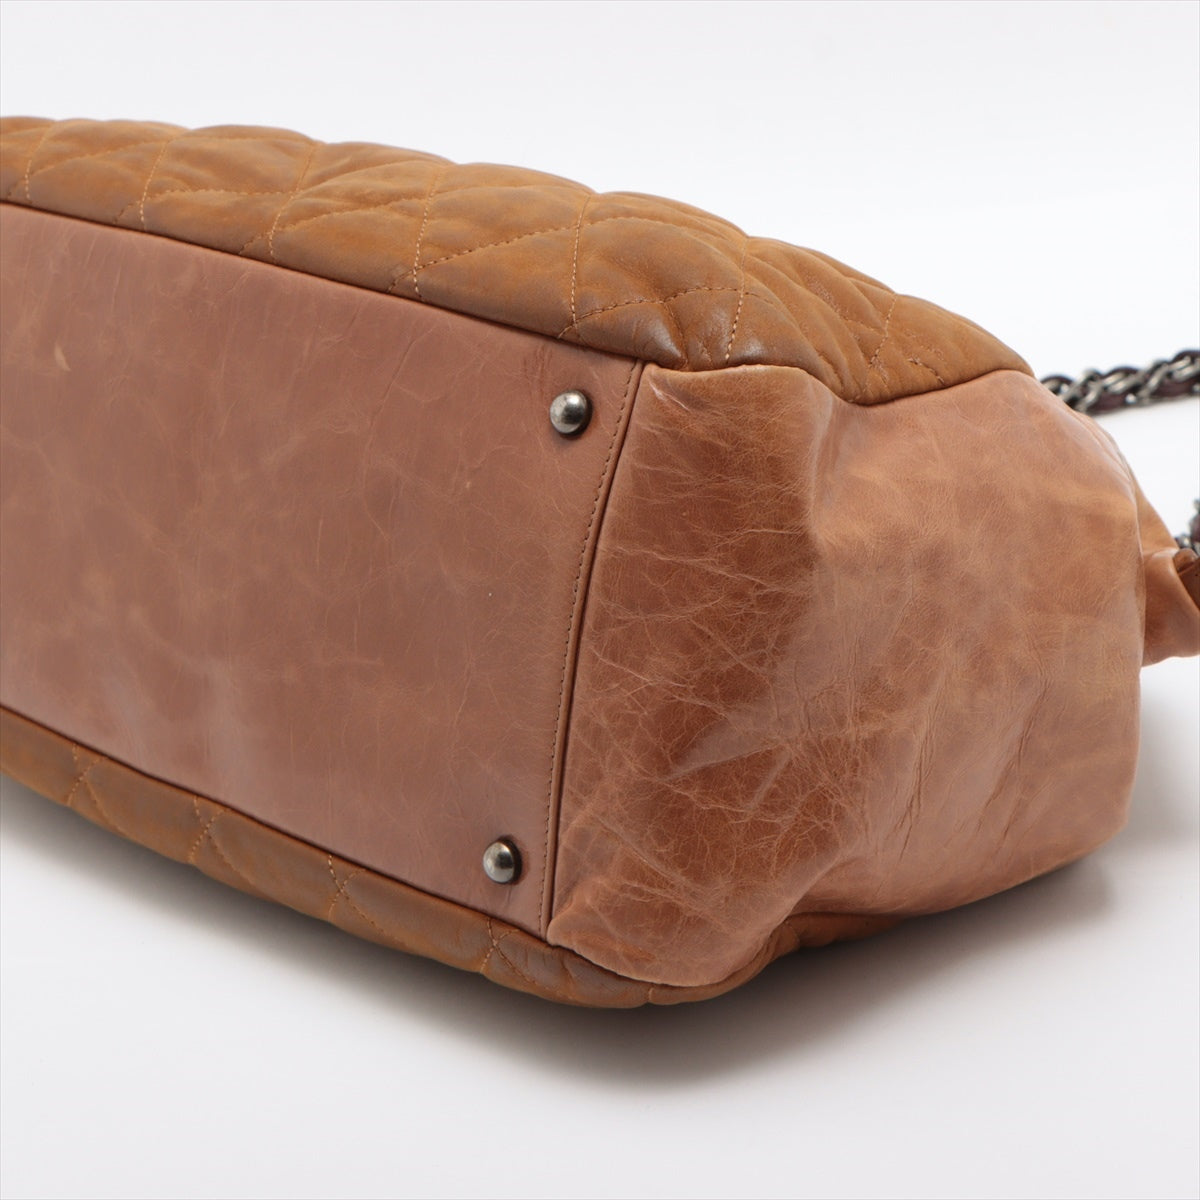 Chanel Matelasse Leather 2 Way Handbag Brown Silver Metal Fittings 14XXXXXX